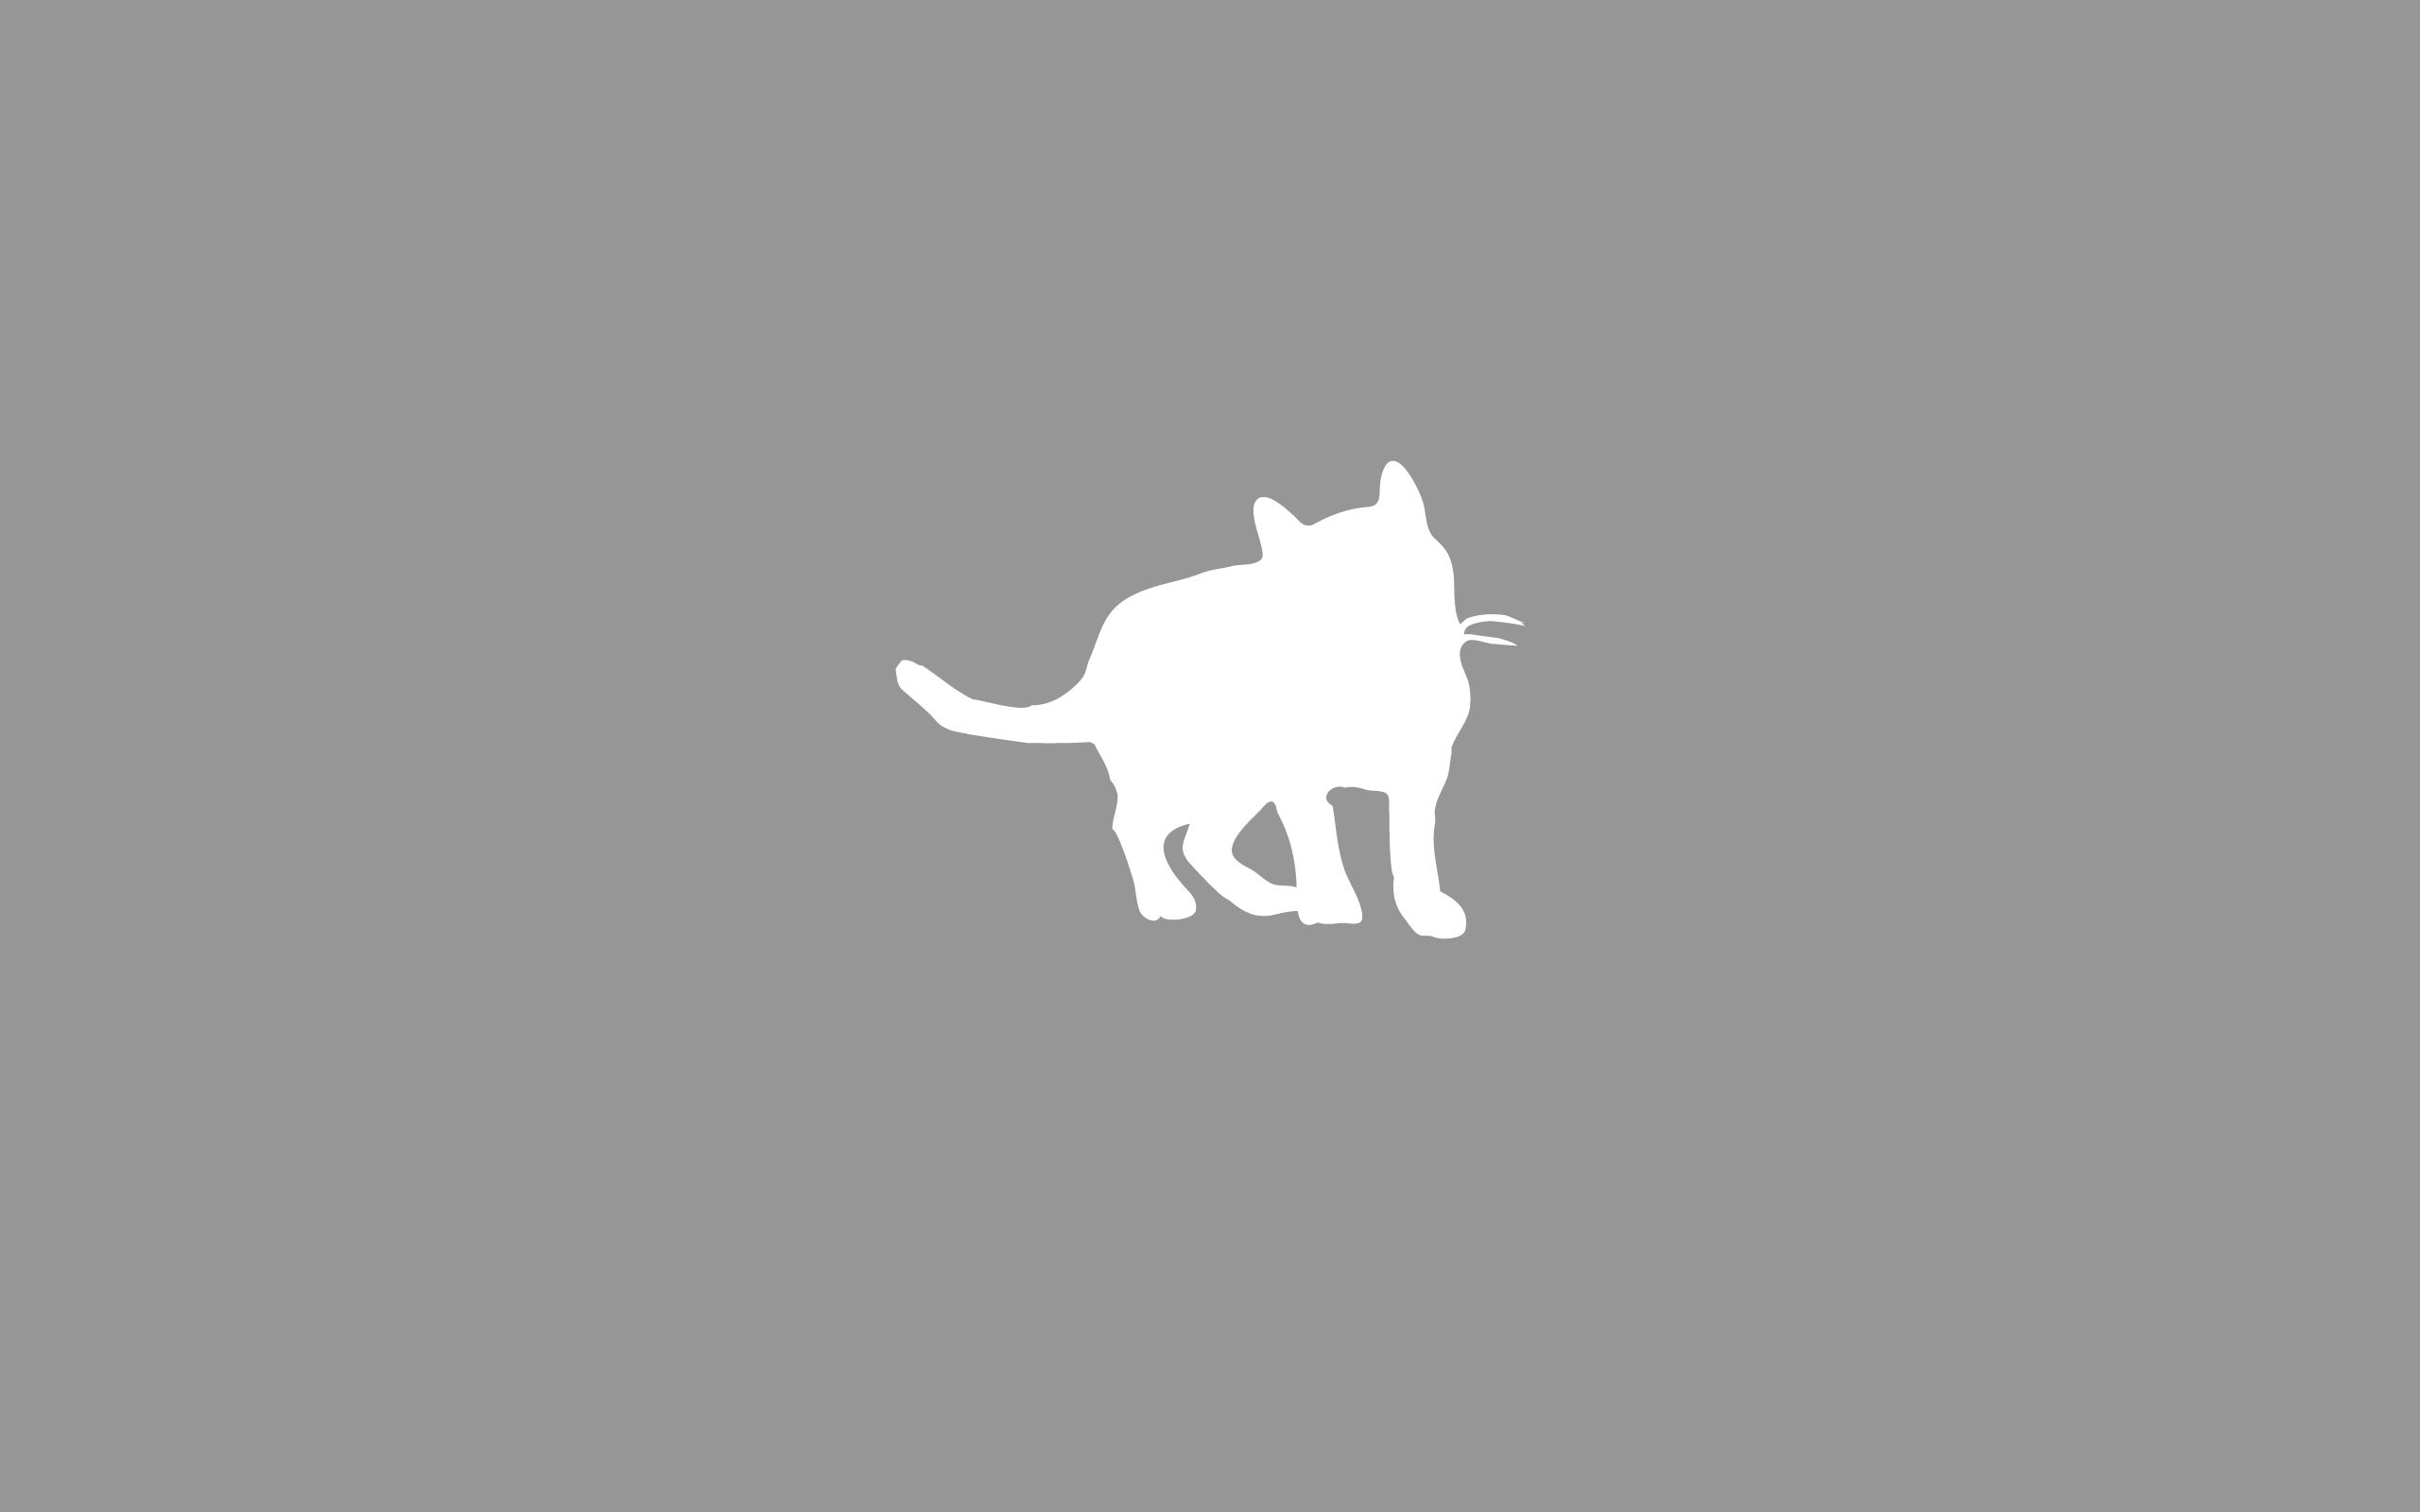 116428 descargar imagen vector, gato, gatito, gráficos, grafismo: fondos de pantalla y protectores de pantalla gratis